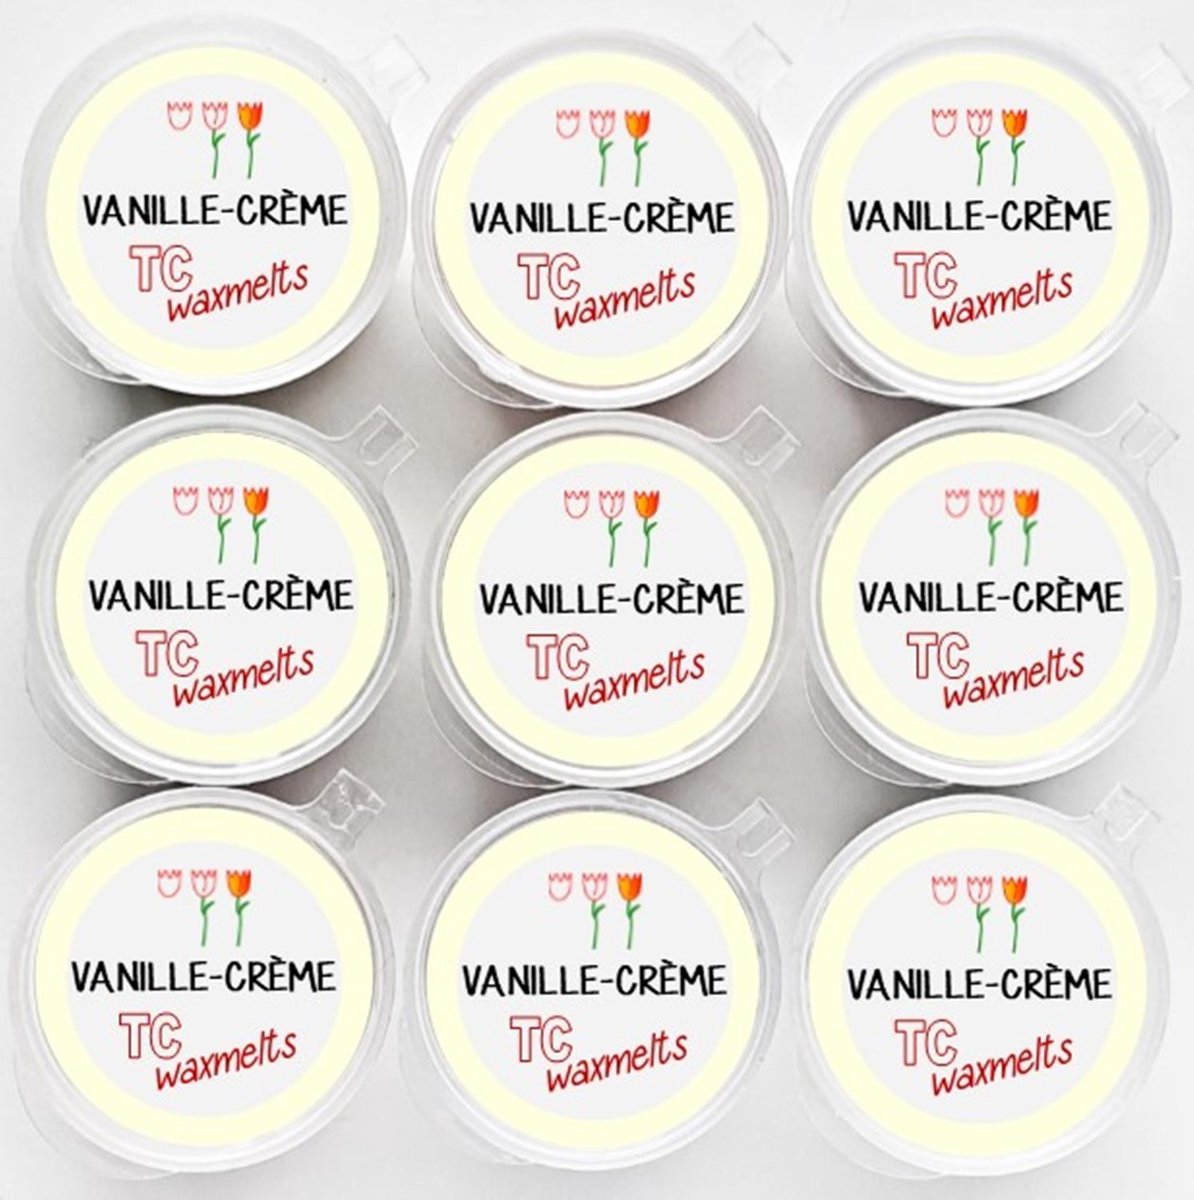 Waxmelts | Vanille-creme | TC